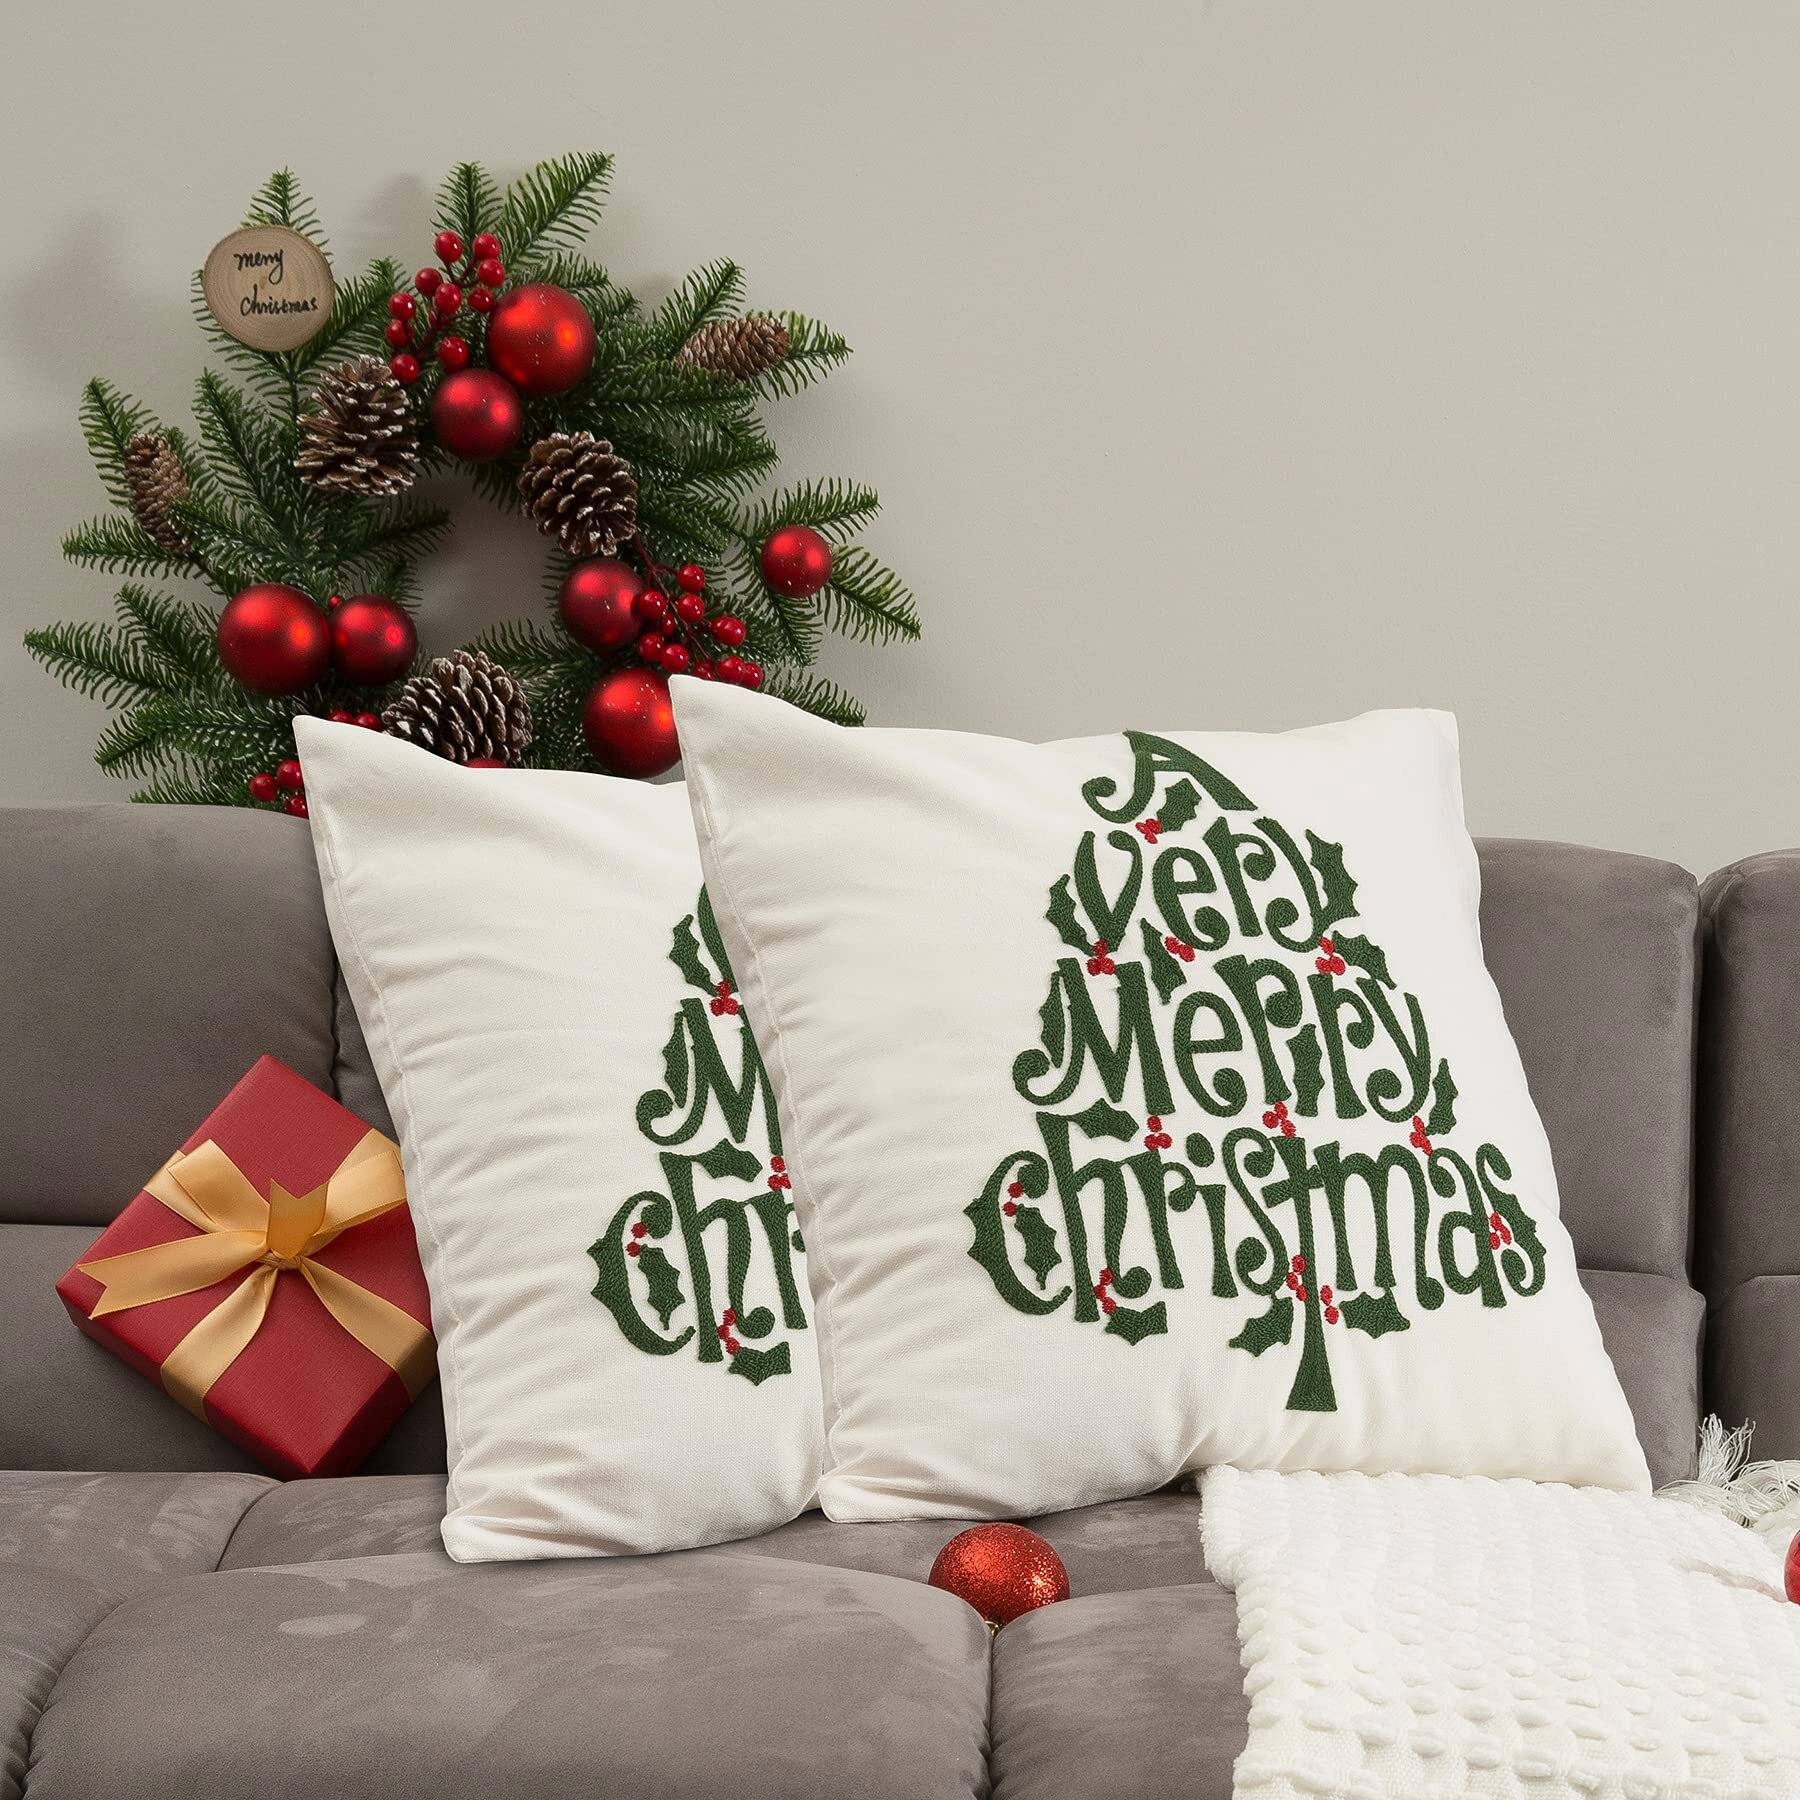 18inch Christmas Pillow Case Glitter Cotton Linen Sofa Cushion Cover Home Decor